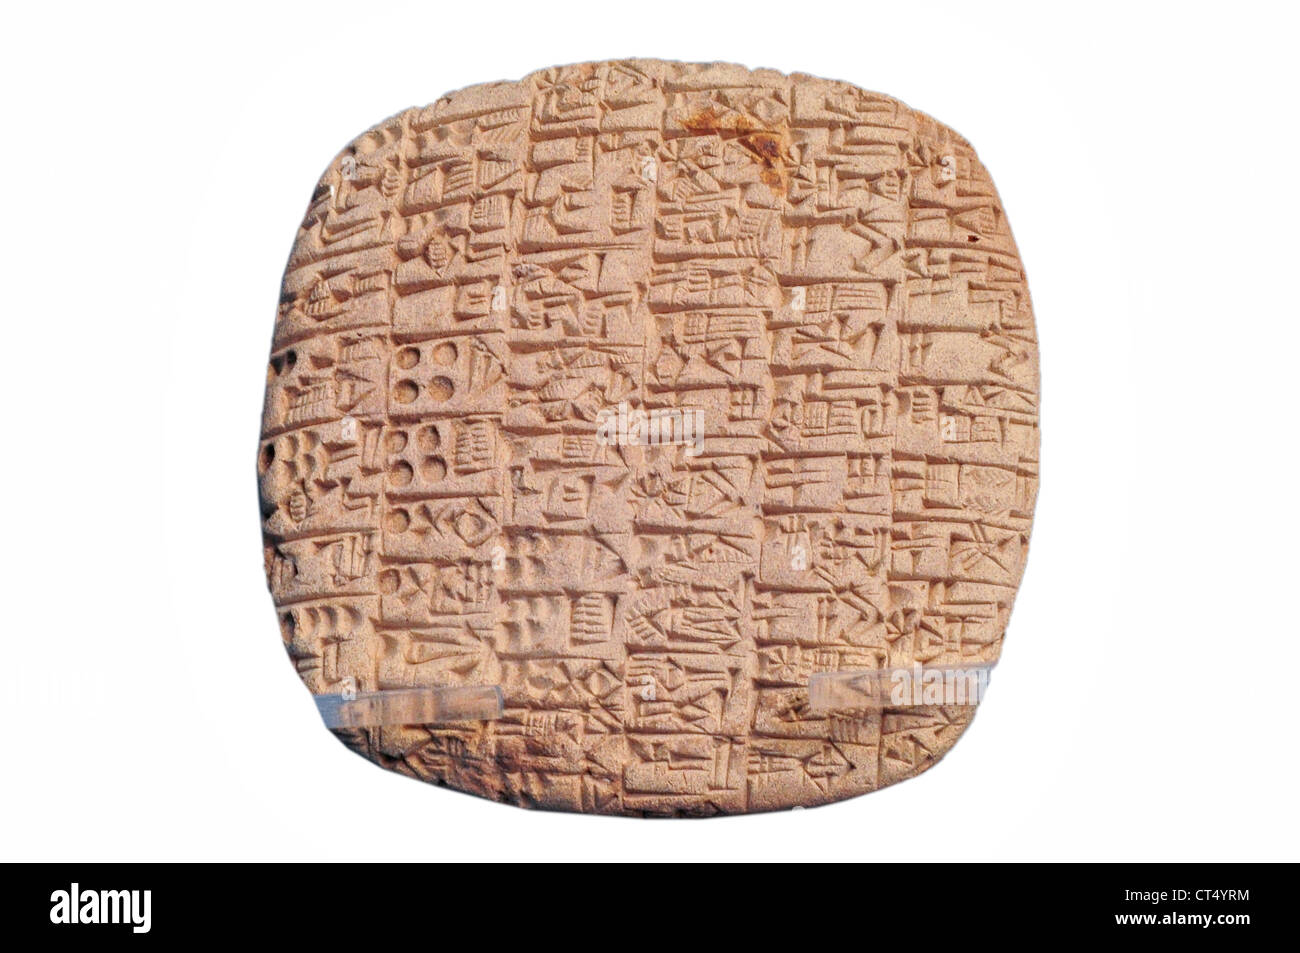 Tile with sumerian document in Cuneiform script, 2500 BC Stock Photo